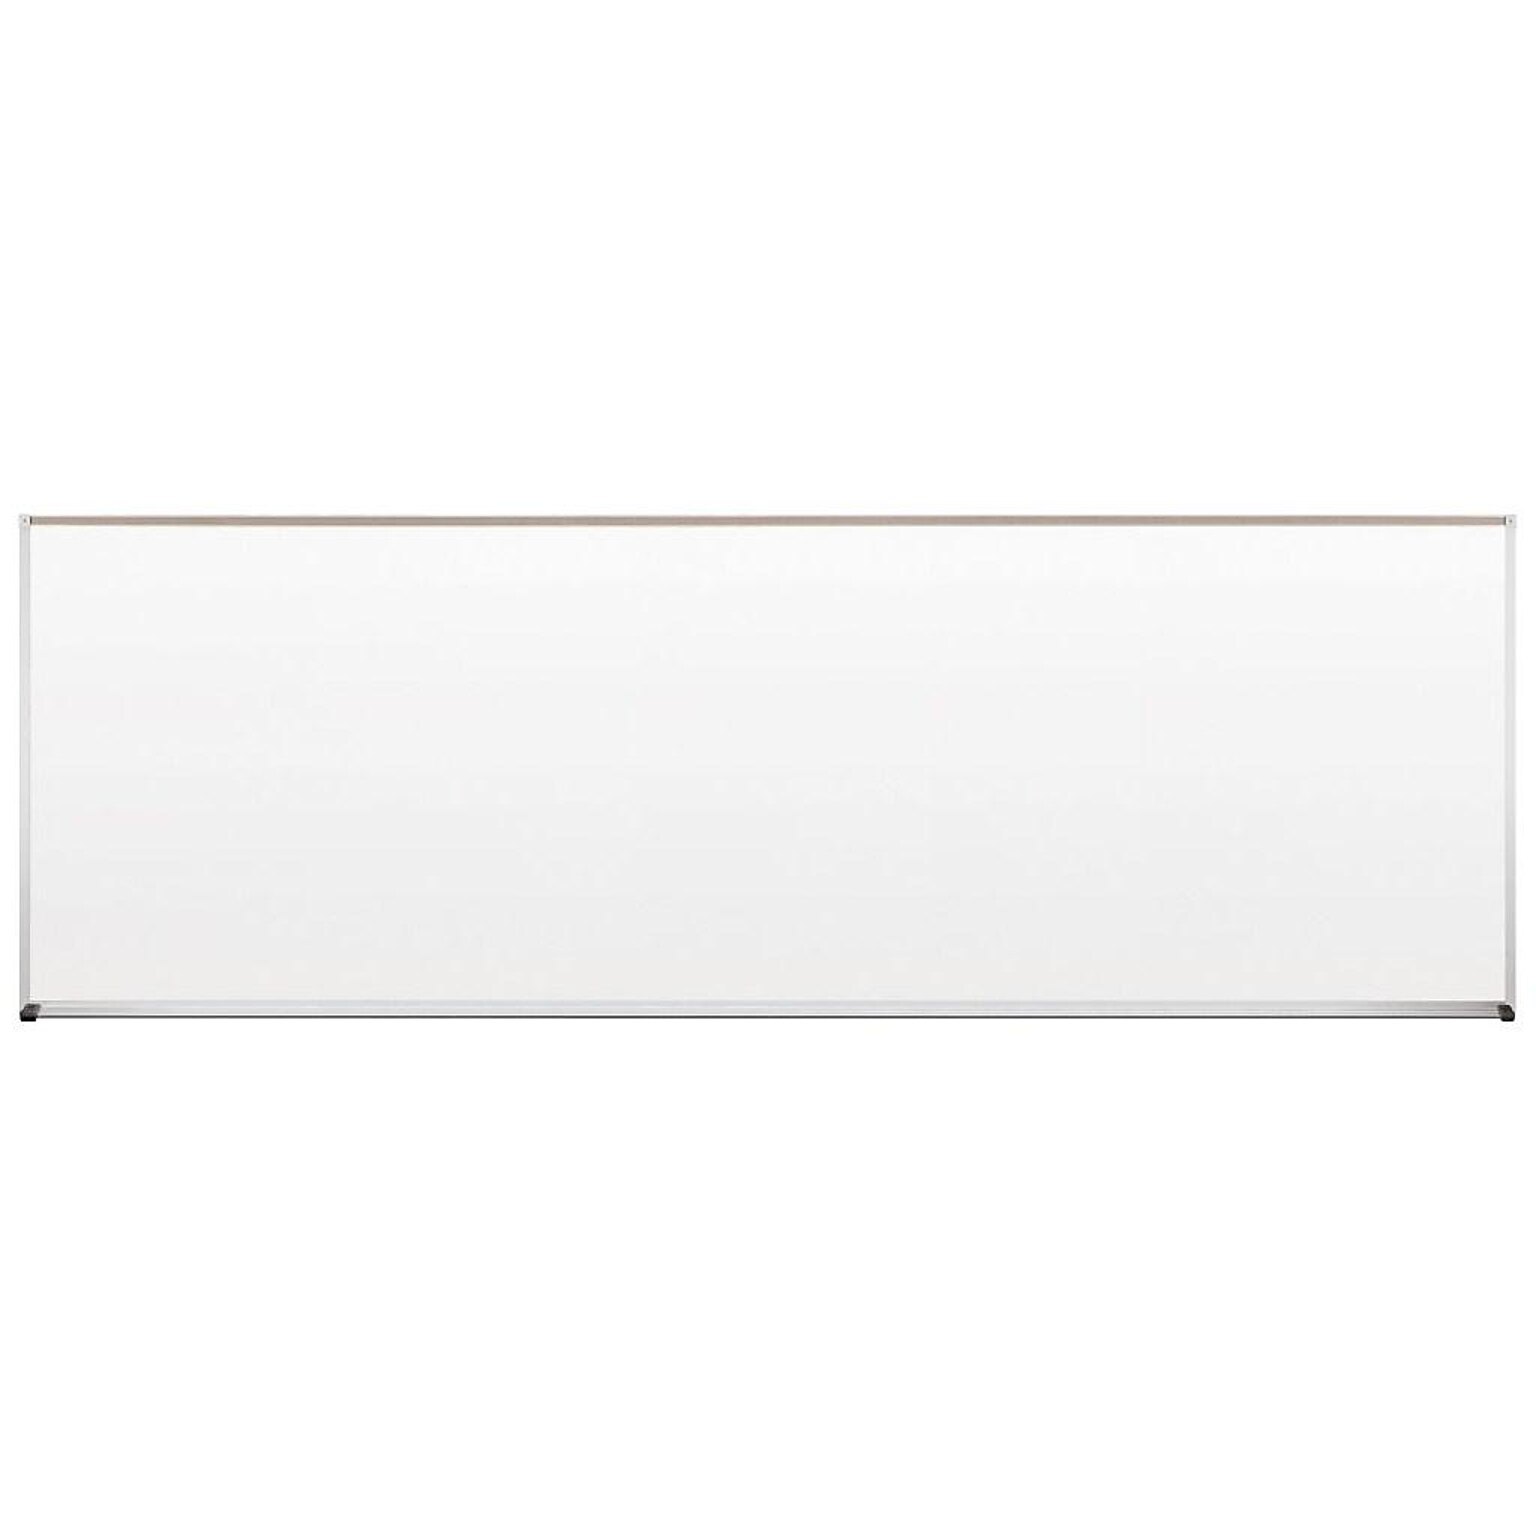 Balt Porcelain Dry-Erase Whiteboard, Anodized Aluminum Frame, 12 x 4 (202AM)